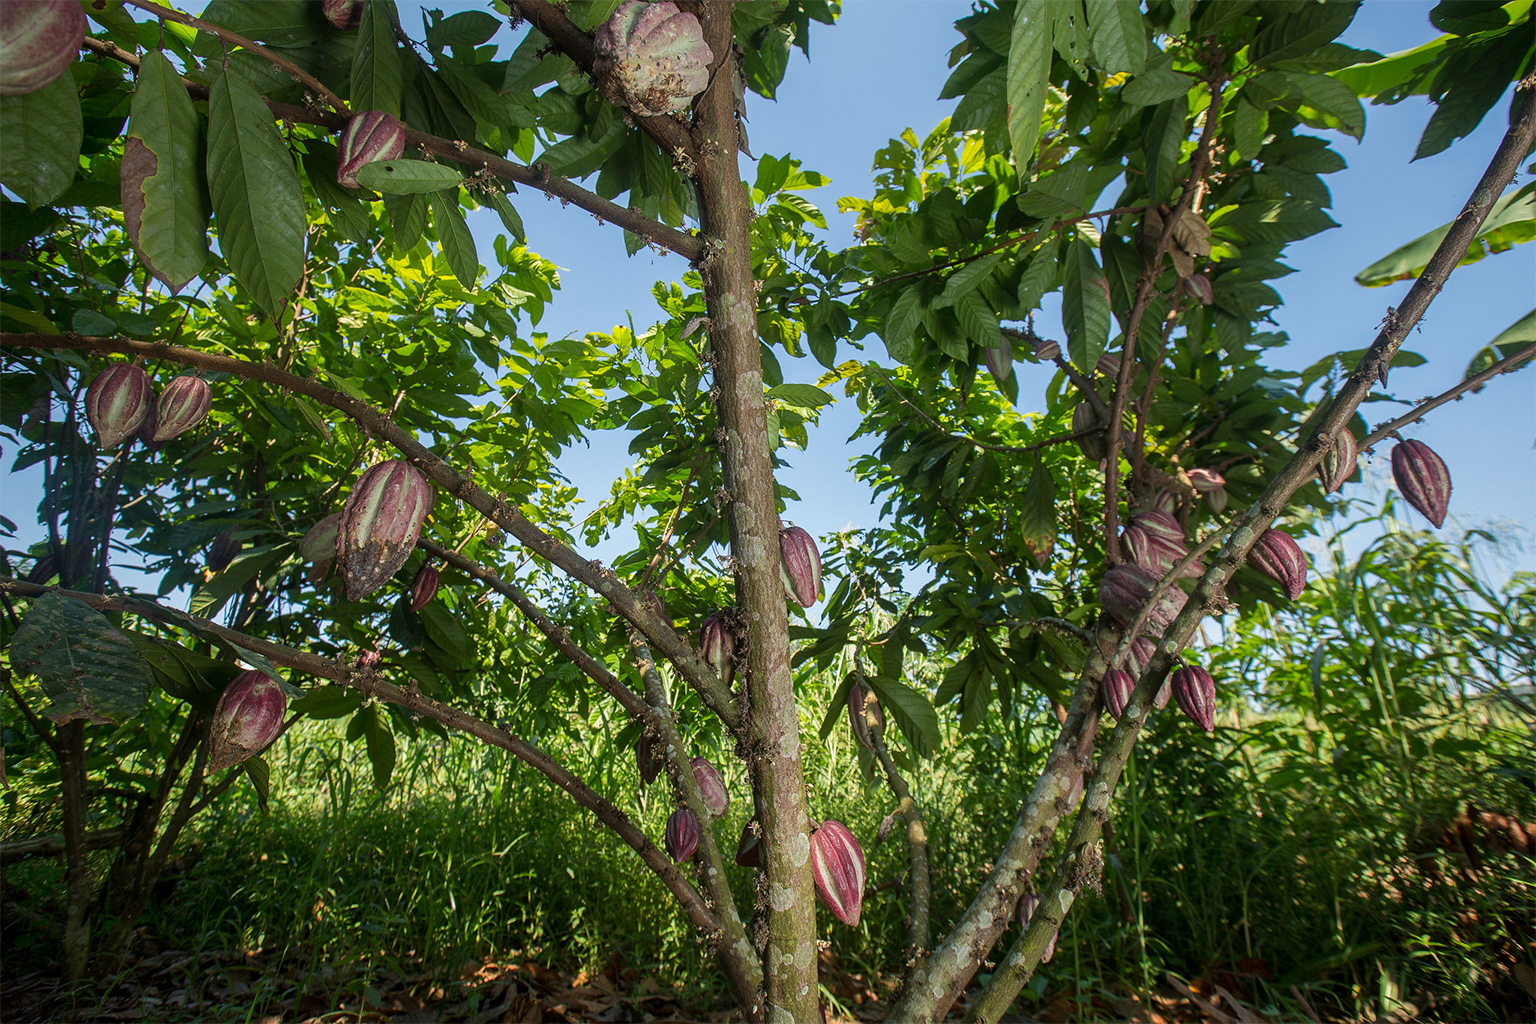 The cocoa tree (Theobroma cacao).